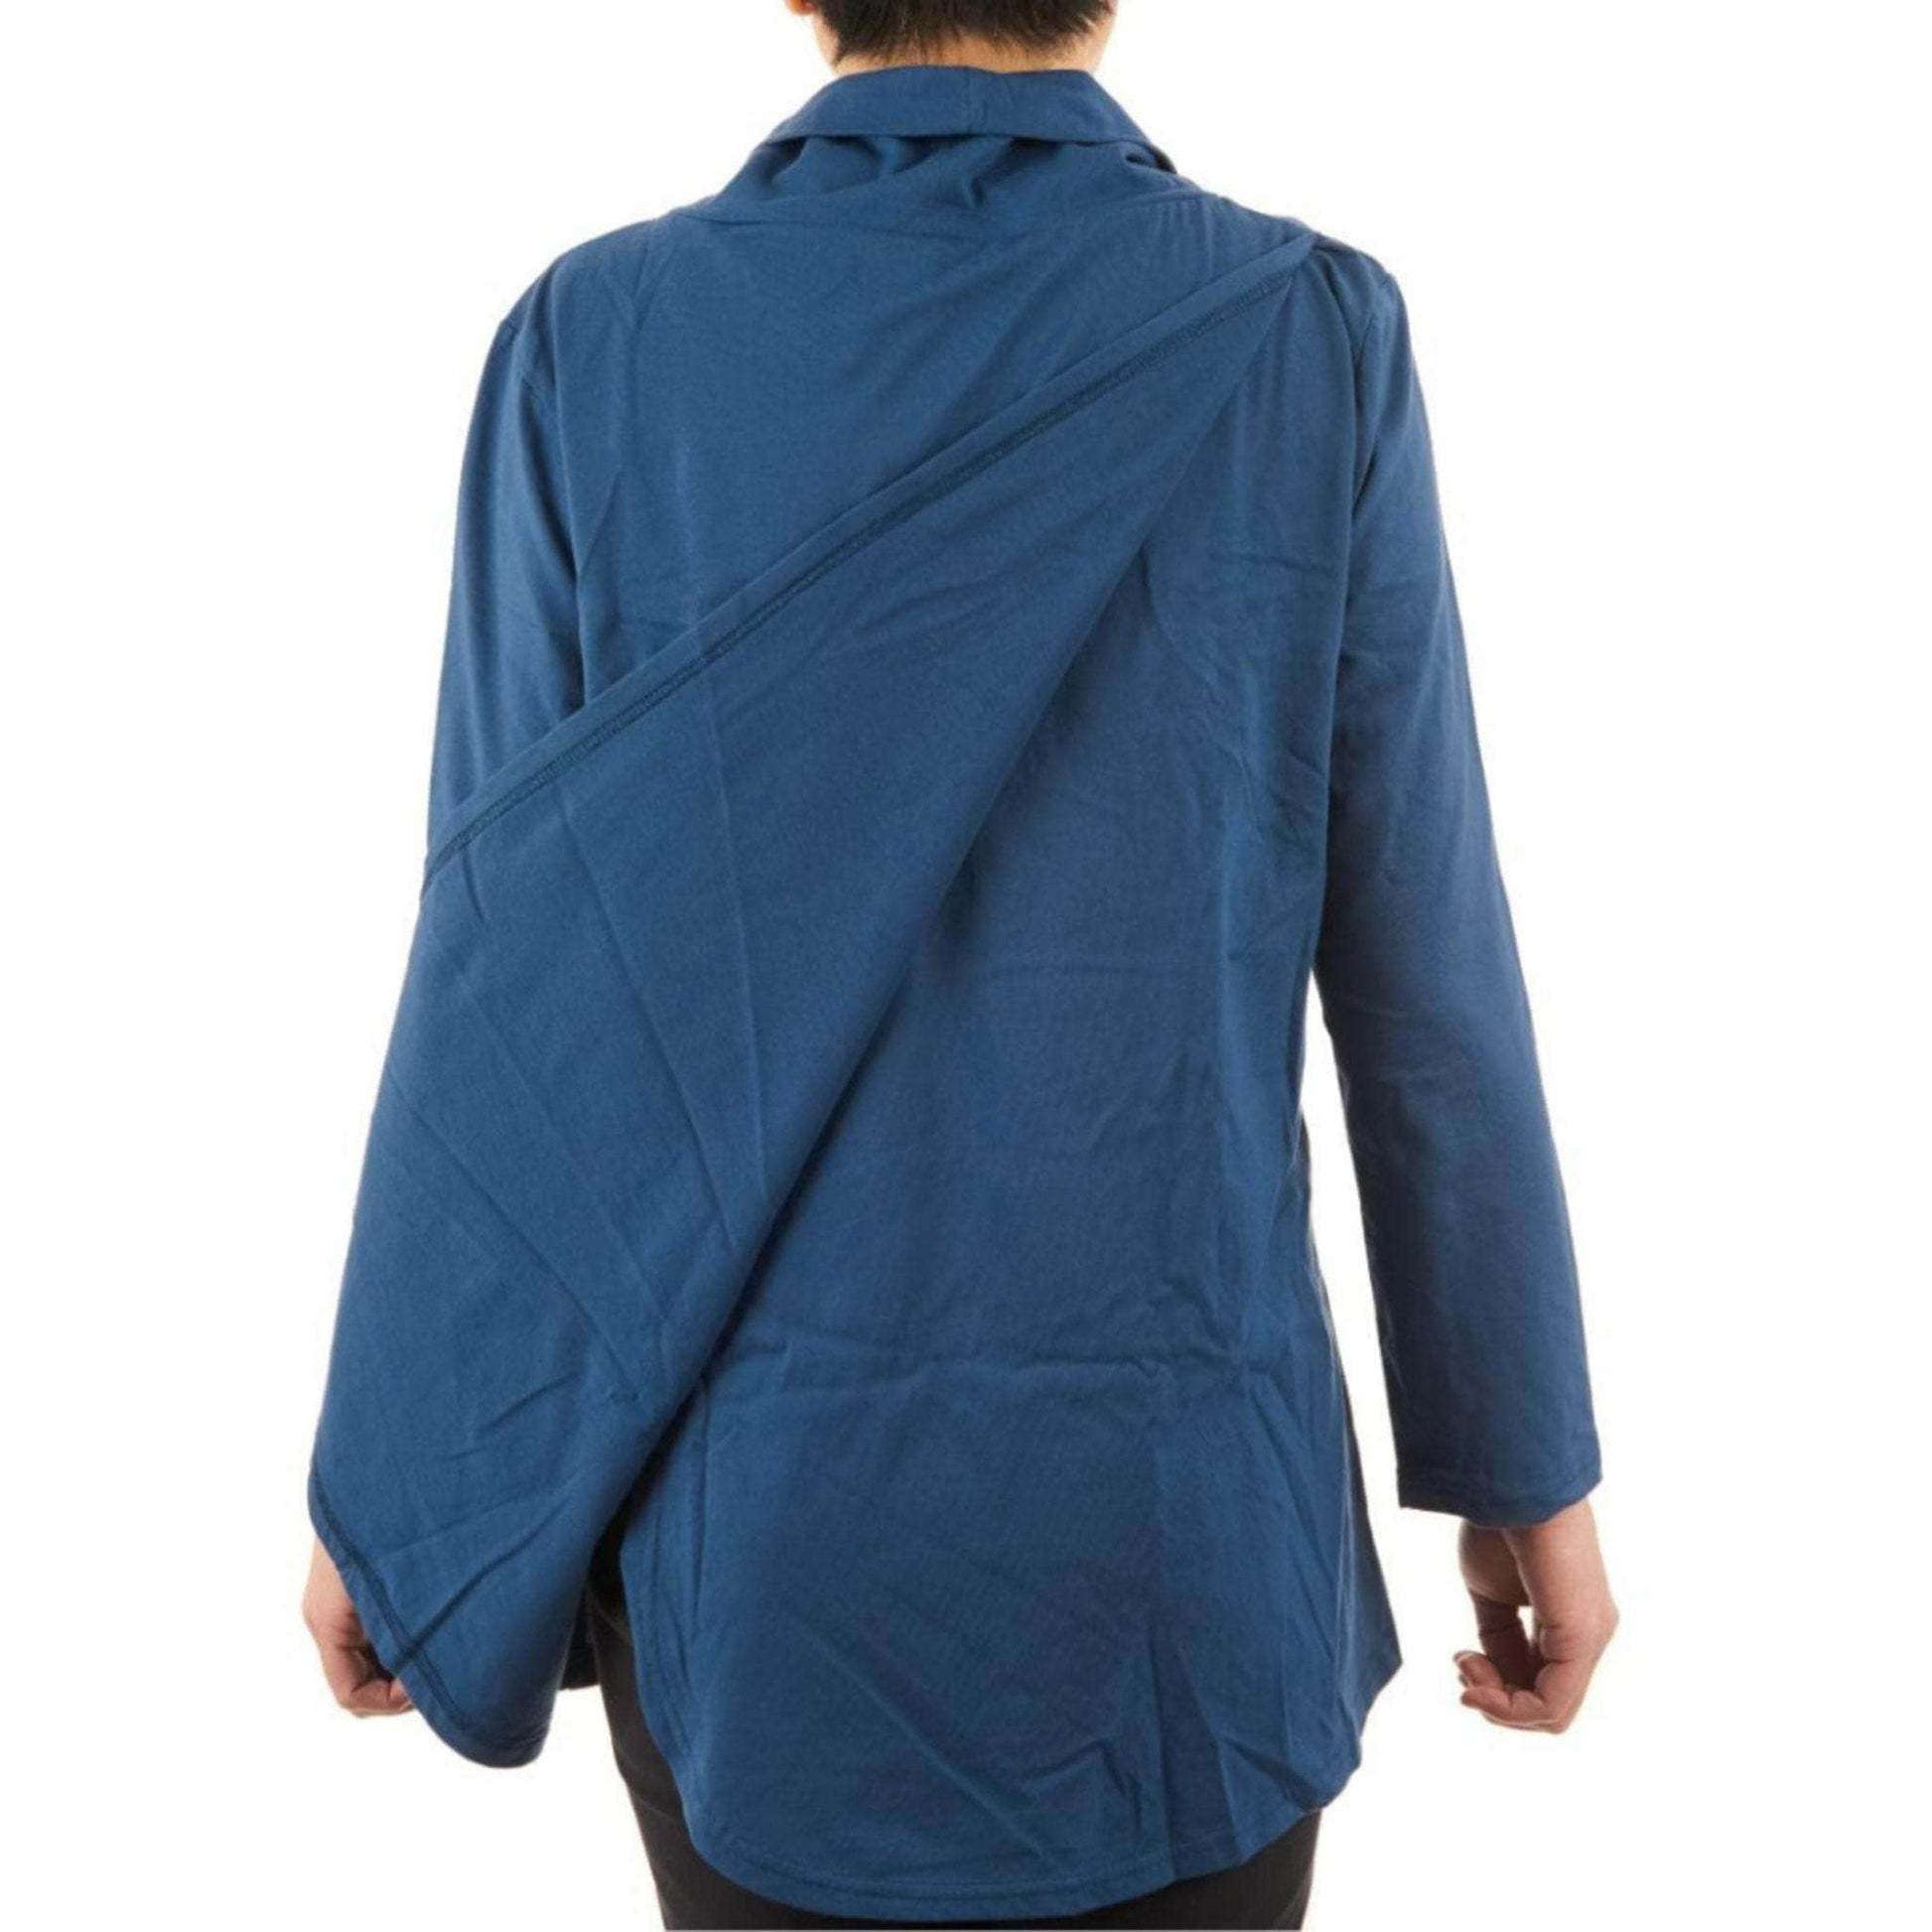 CC Women's Eliana Long Sleeve Cowl Neck Top - Dusty Blue - Caring Clothing